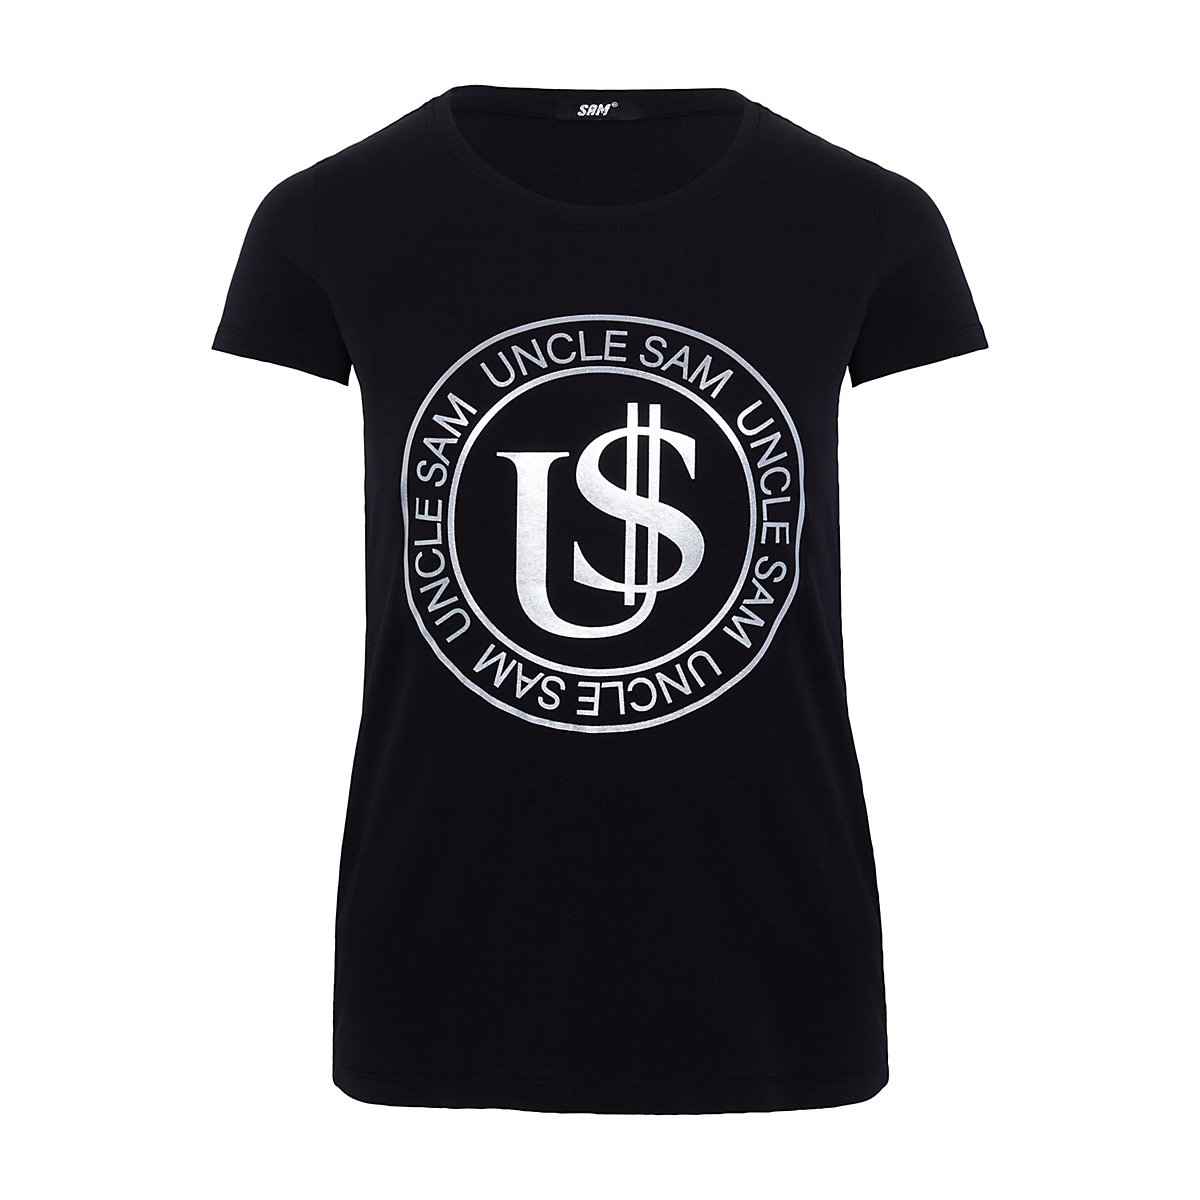 SAM® by UNCLE SAM T-Shirt mit coolem Glitzer-Wording-Print T-Shirts schwarz